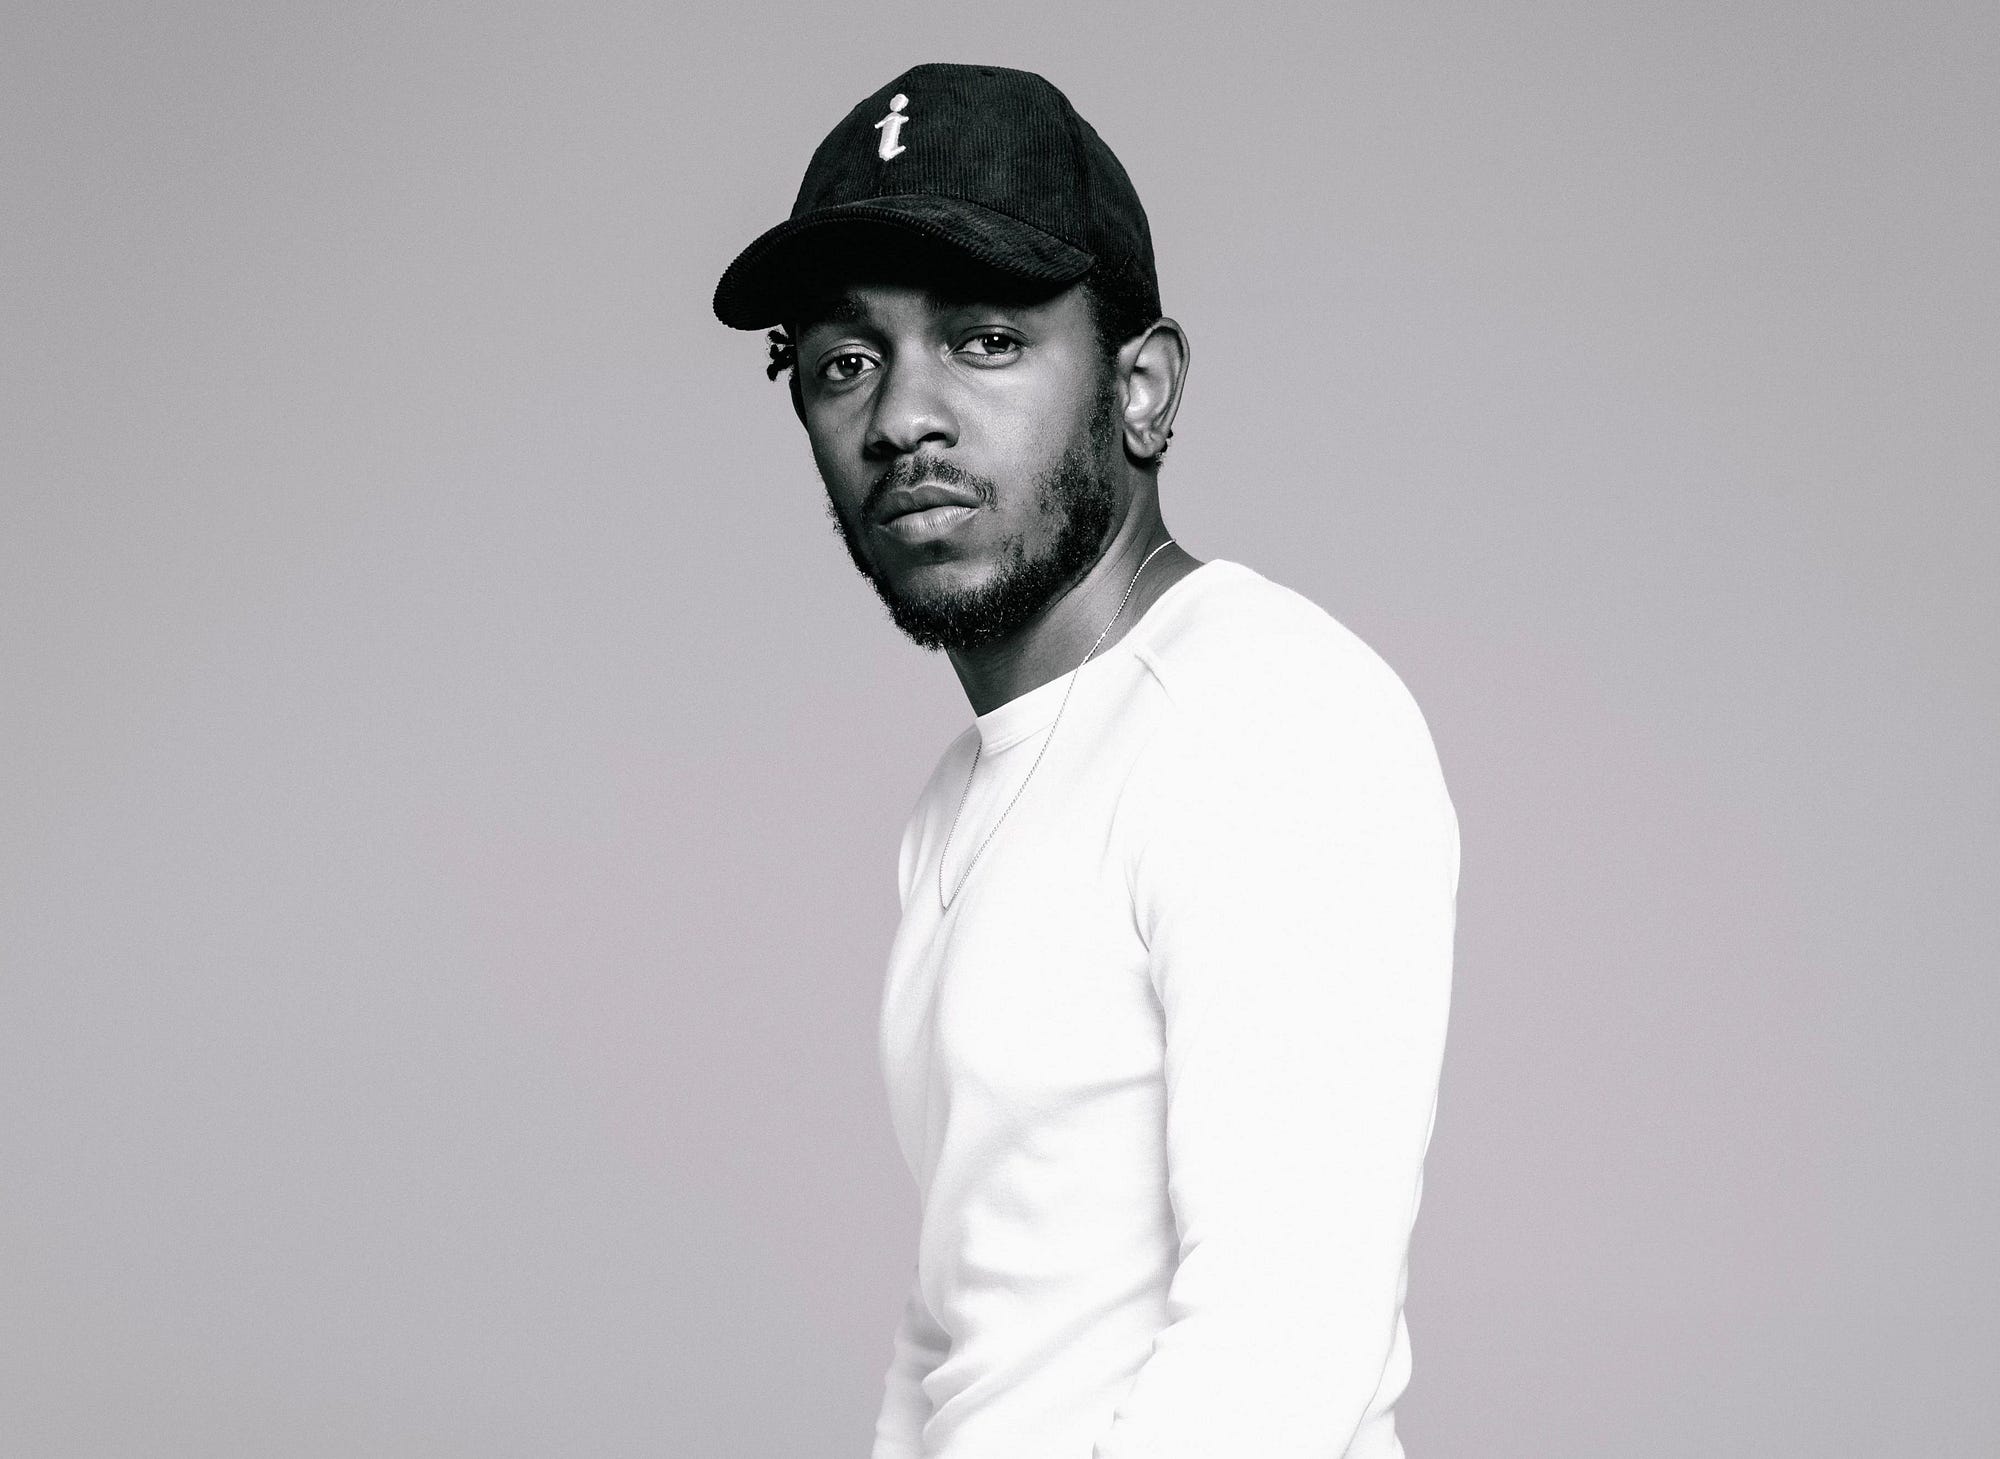 Kendrick Lamar Type Beat - XXL